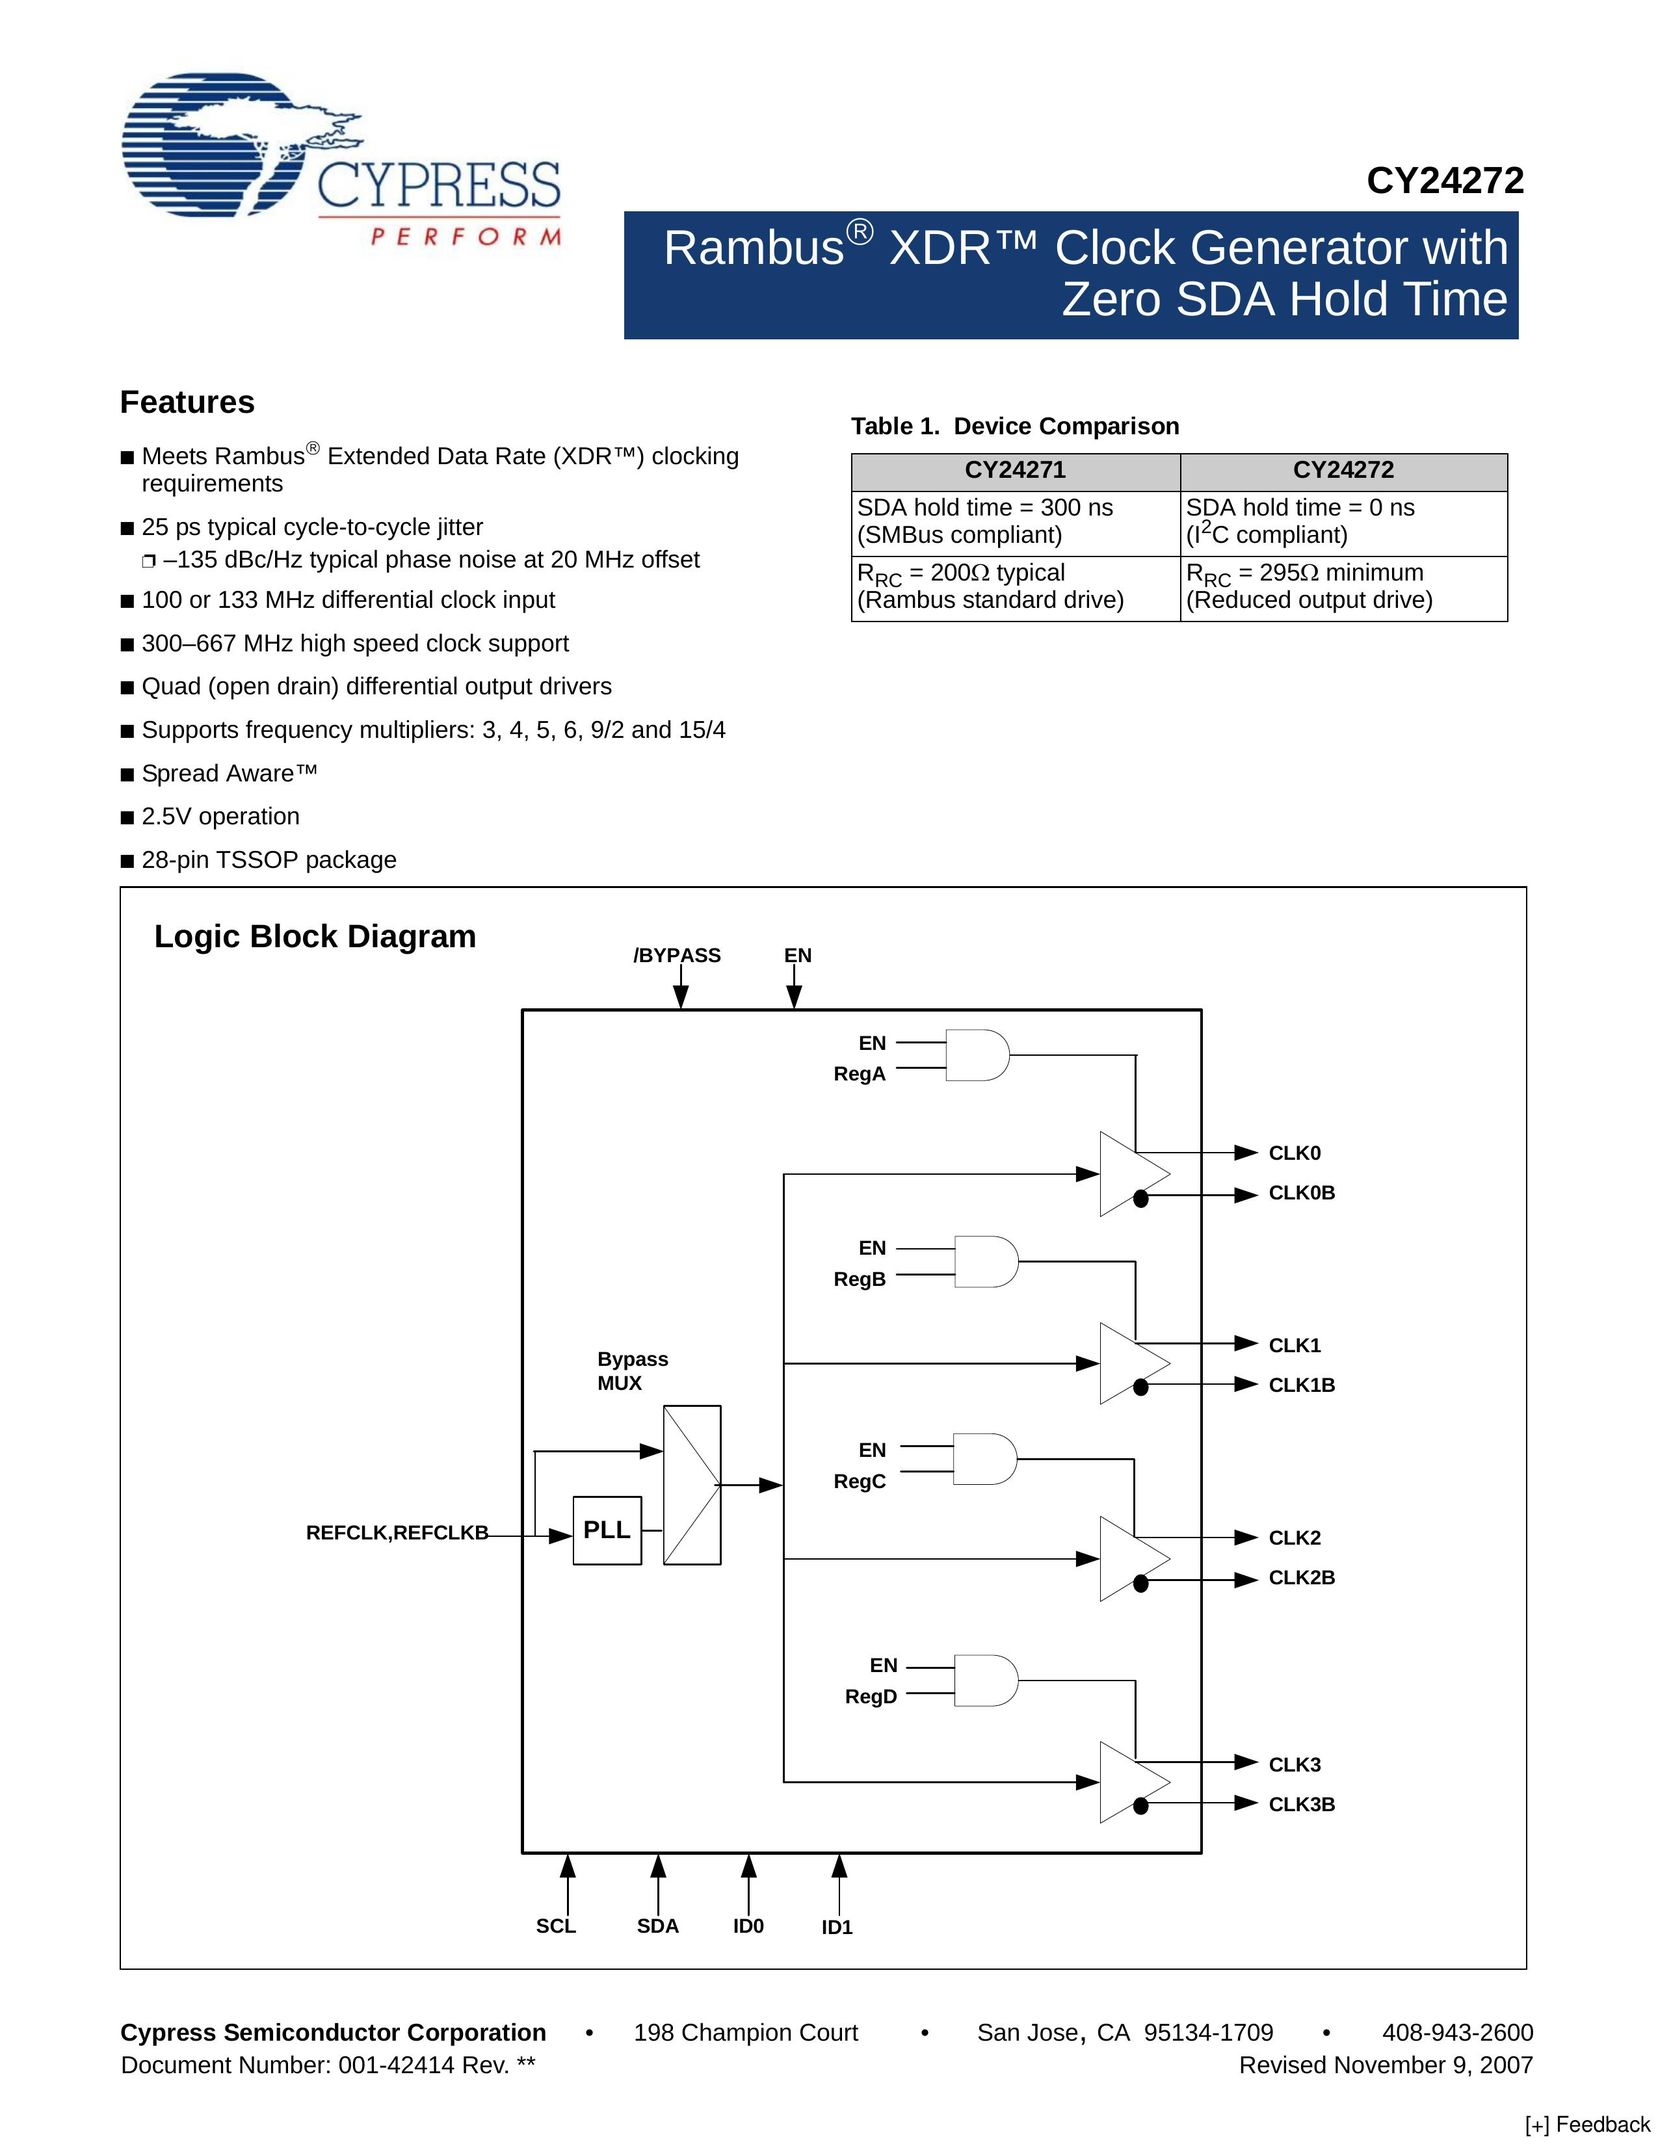 Cypress CY24272 Clock User Manual